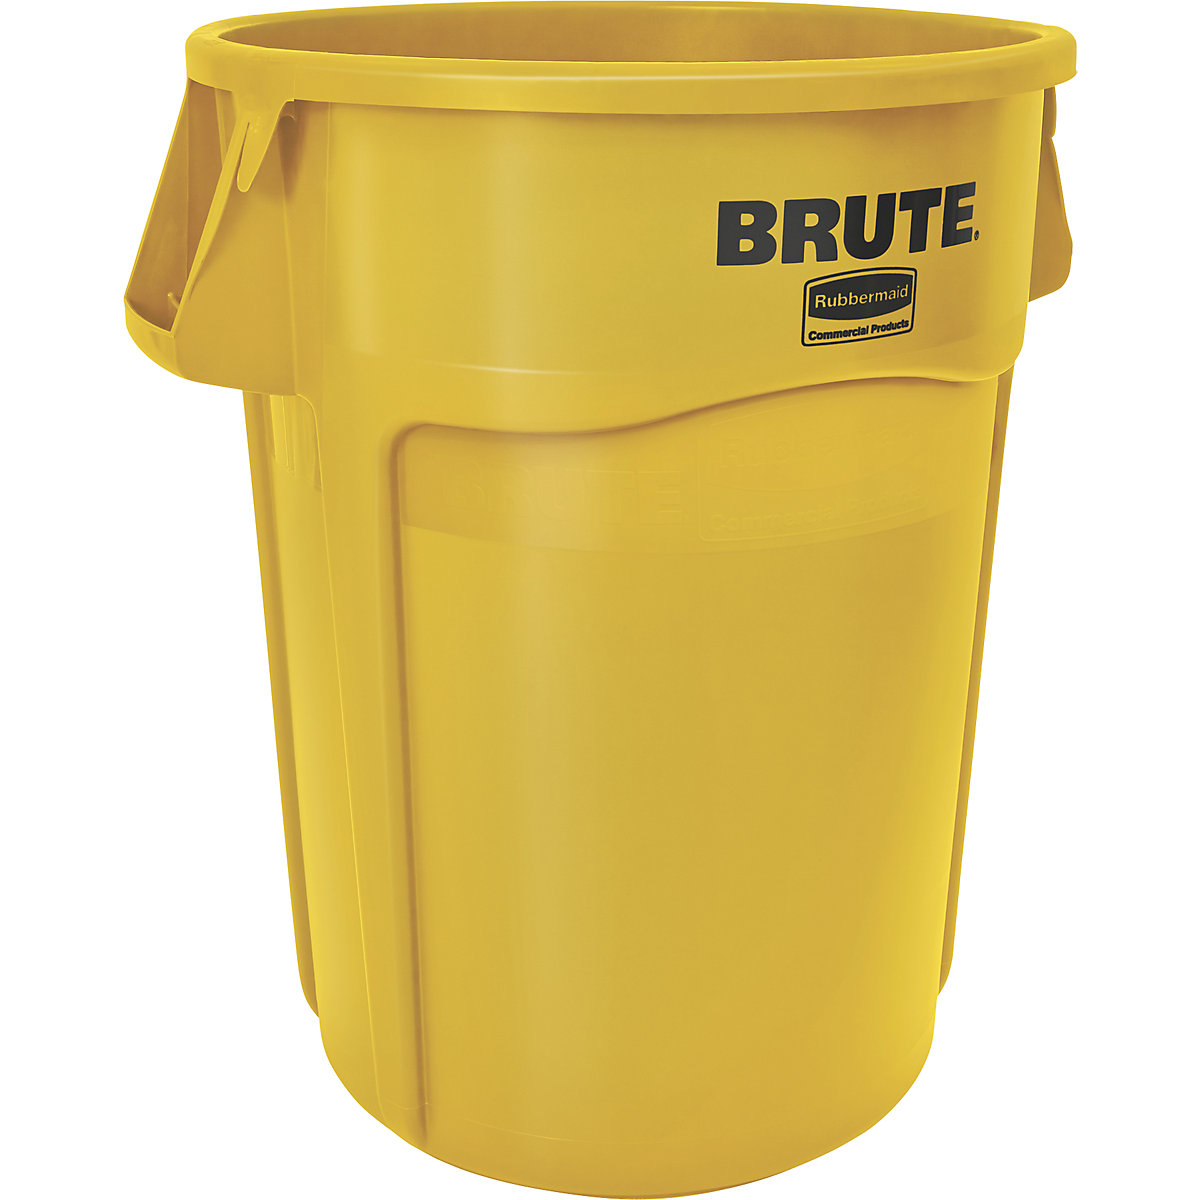 Univerzalni kontejner BRUTE®, okrugli – Rubbermaid, sadržaj 166 l, u žutoj boji-13